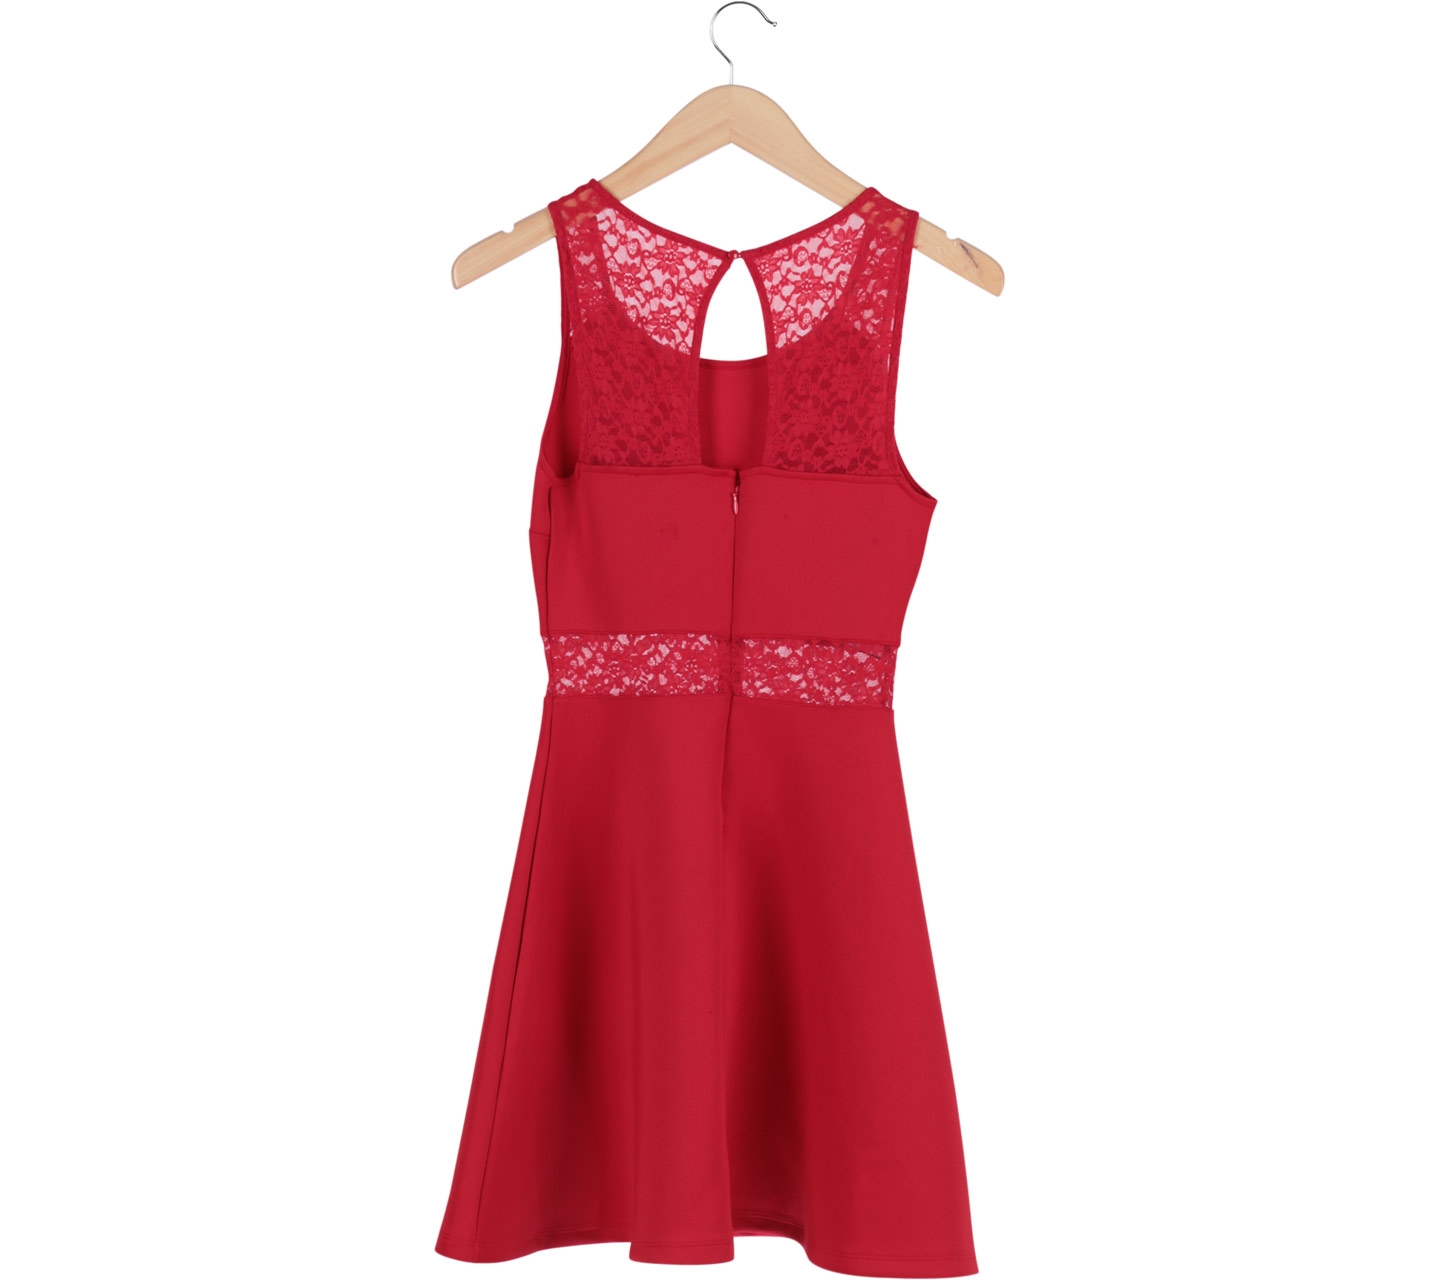 Forever 21 Red Lace Insert Sleeveless Mini Dress